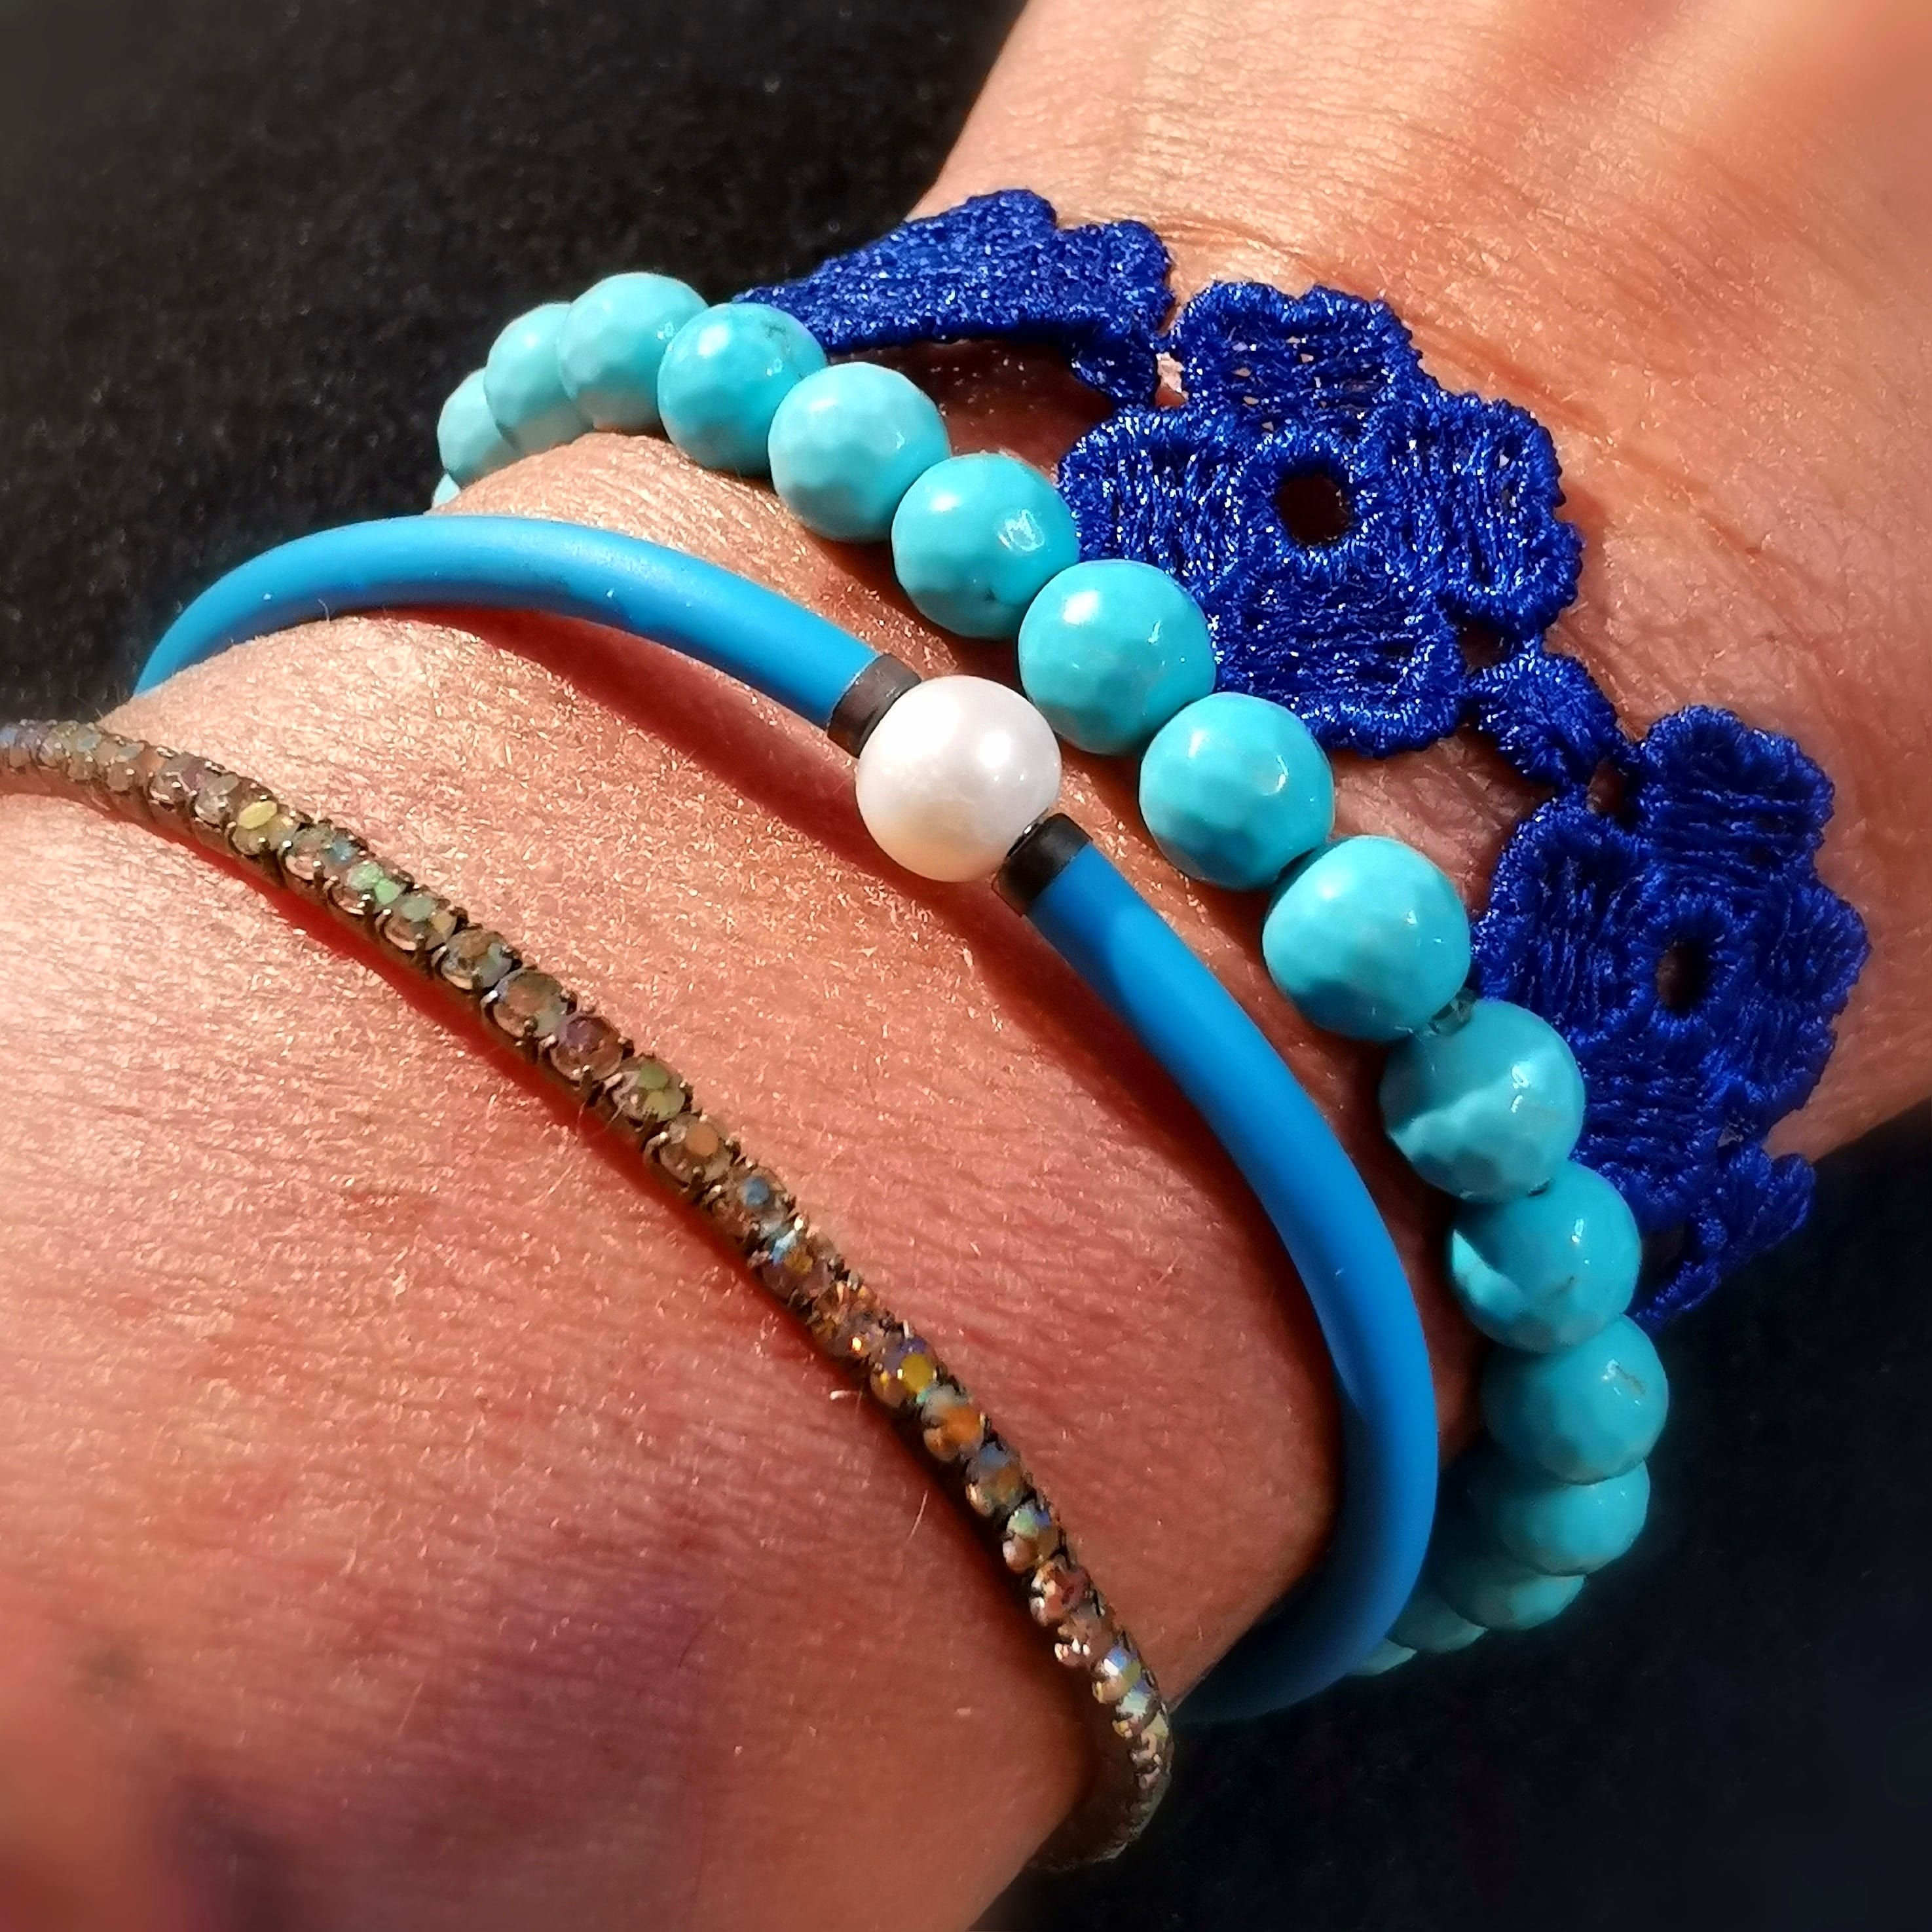 4er Armband Set Blau Türkis, Boho Bijou Karma Chakra Edelstein Armbändchen, geweiht - leichte Wege